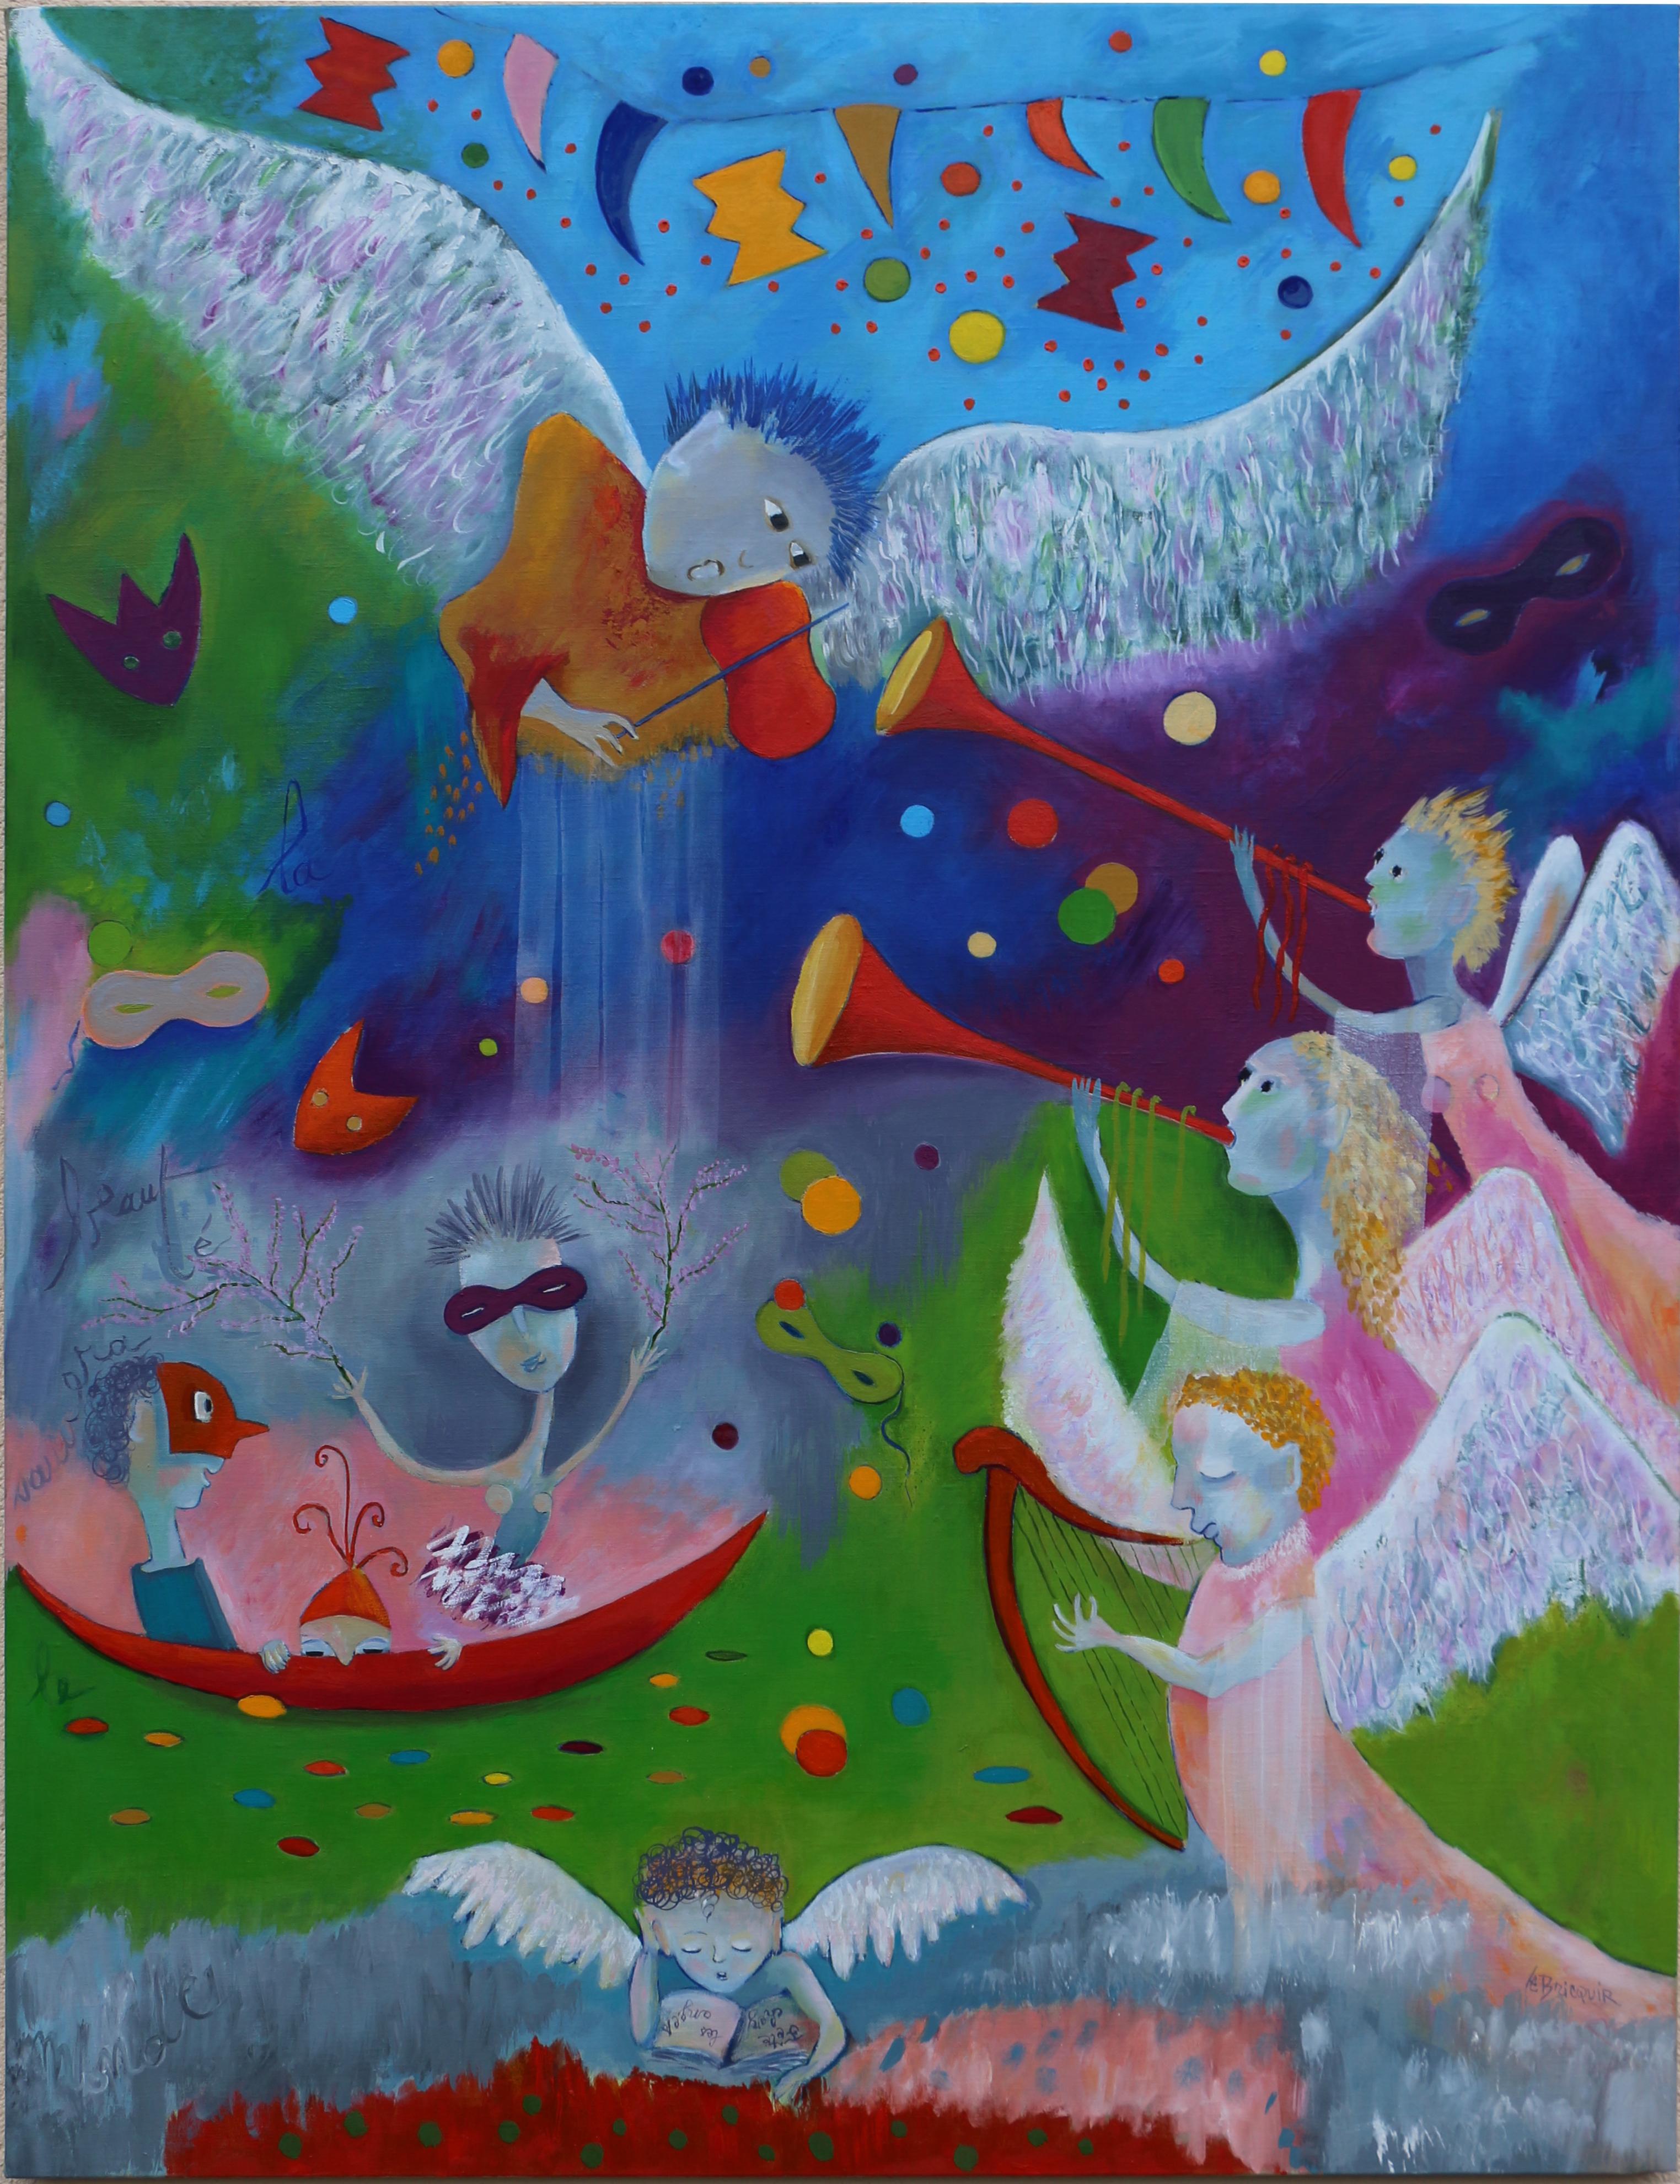 Danielle Le Bricquir Figurative Painting – Party Among The Angels - großes Gemälde in Rot, Weiß, Blau, Orange, Braun und Gelbgrün